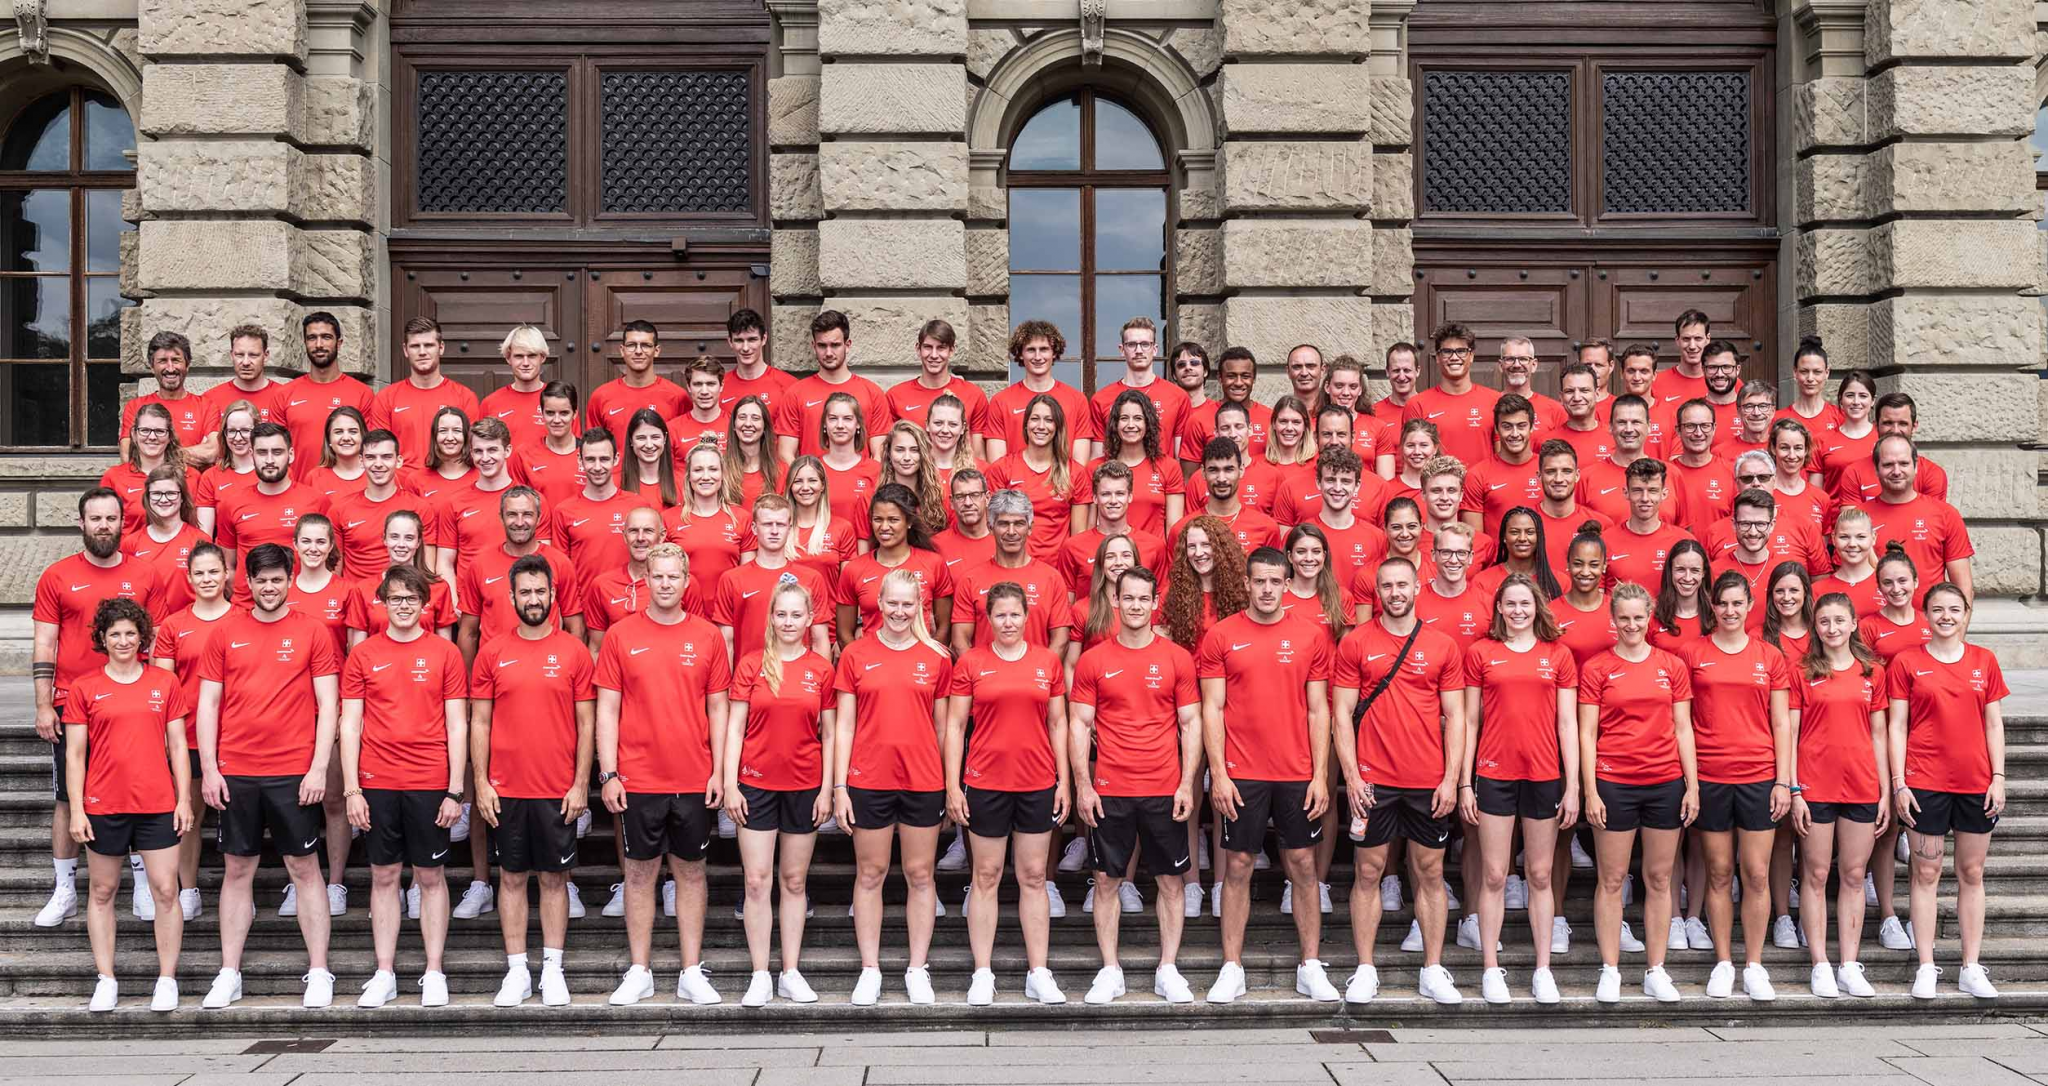 Switzerland to send 82-member team to Naples 2019